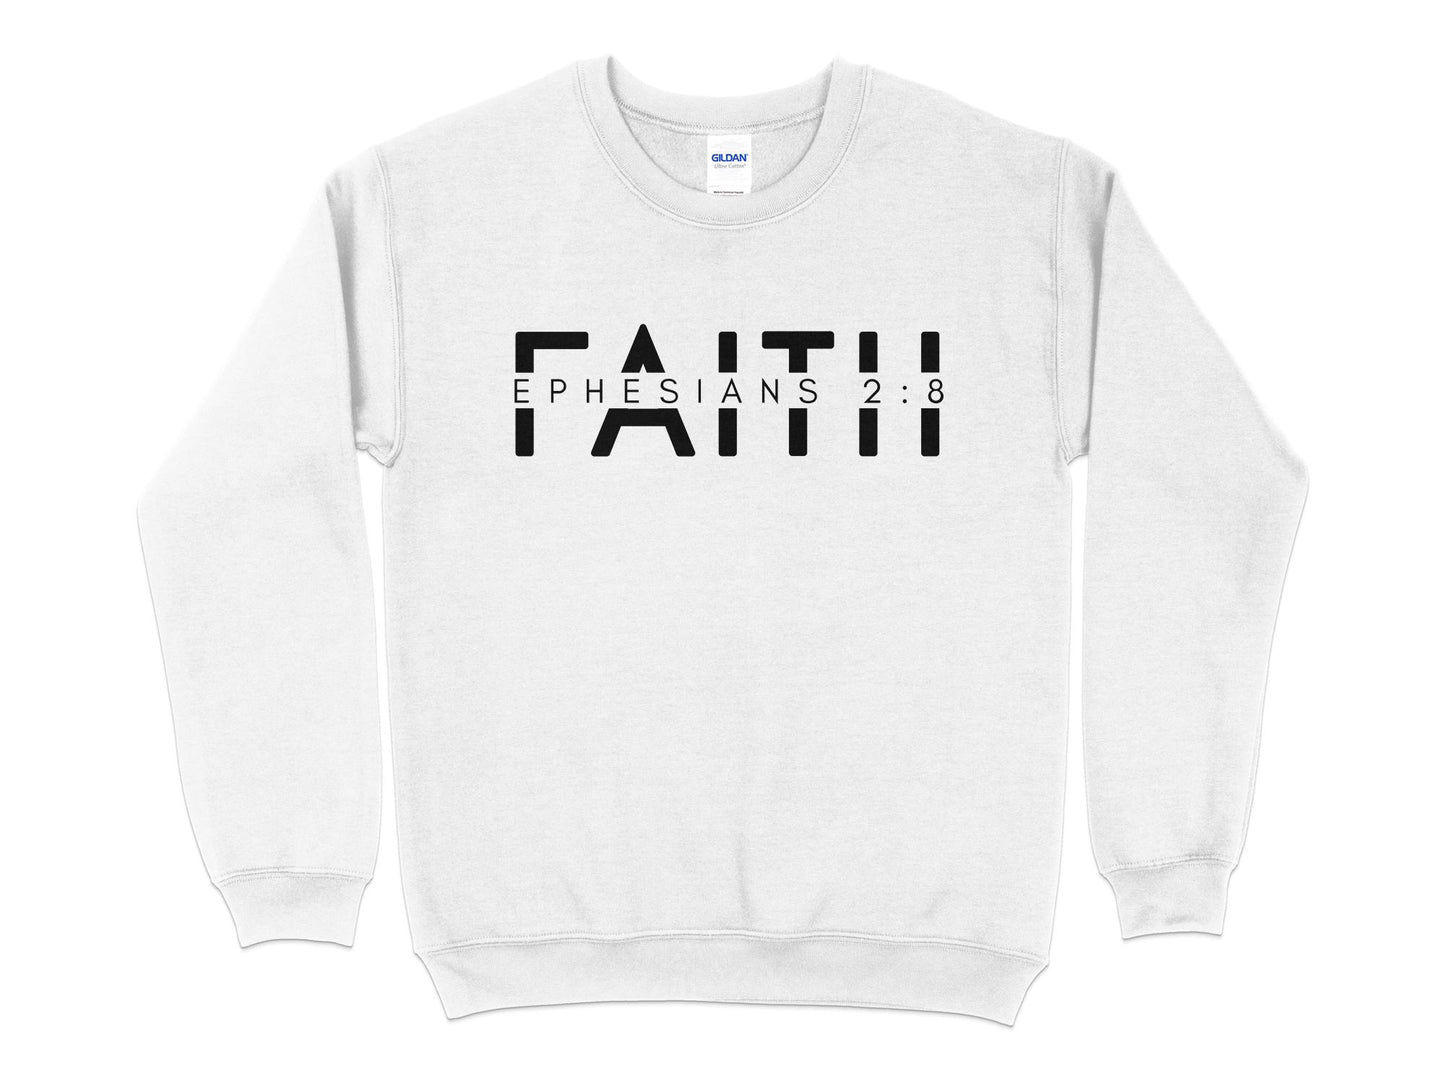 Unisex Faith Ephesians 2:8 Sweatshirt, Bible Verse Christian Pullover, Religious Scripture Soft Cotton Sweater, Casual Wear - Mardonyx Sweatshirt S / White